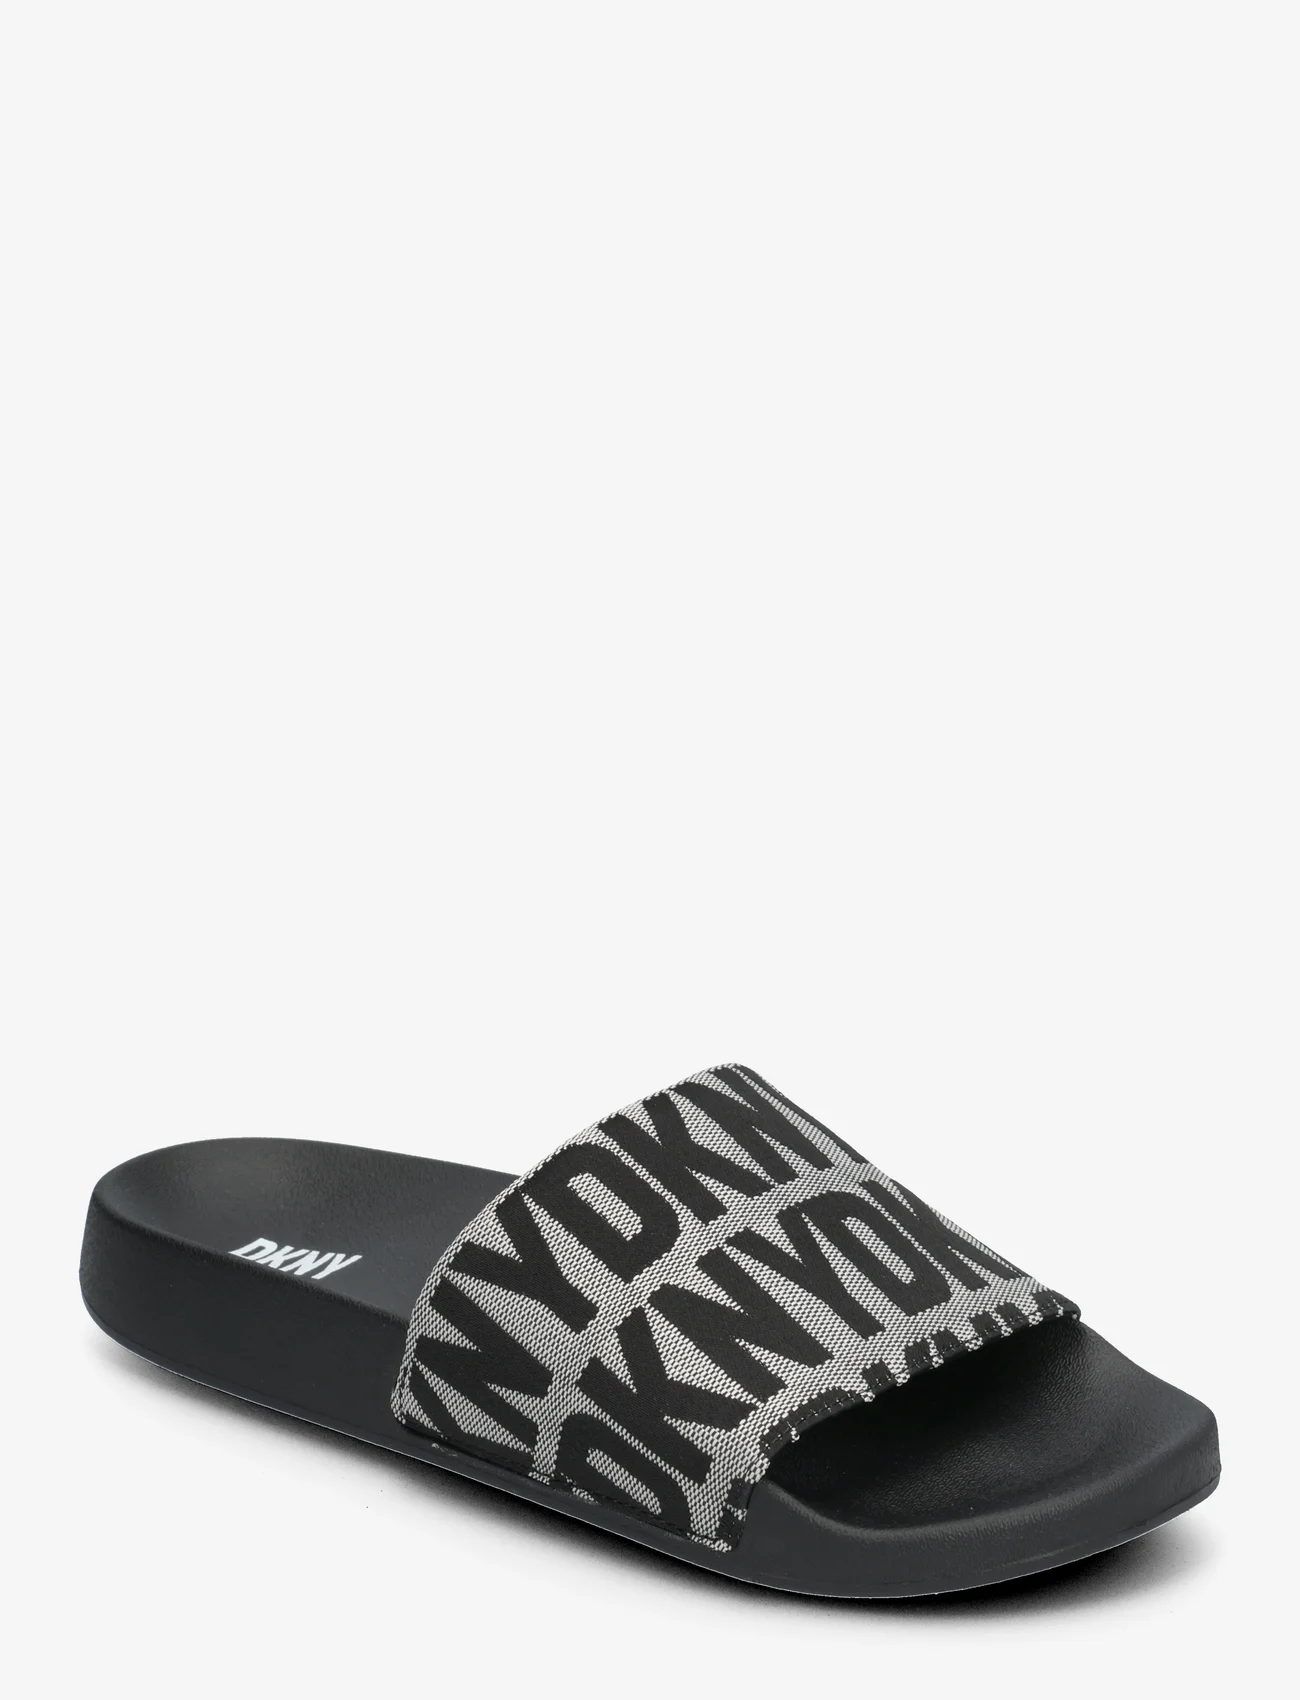 DKNY - ZELLA - FLAT SLIDE - zempapēžu sandales - 005 - black/white - 0